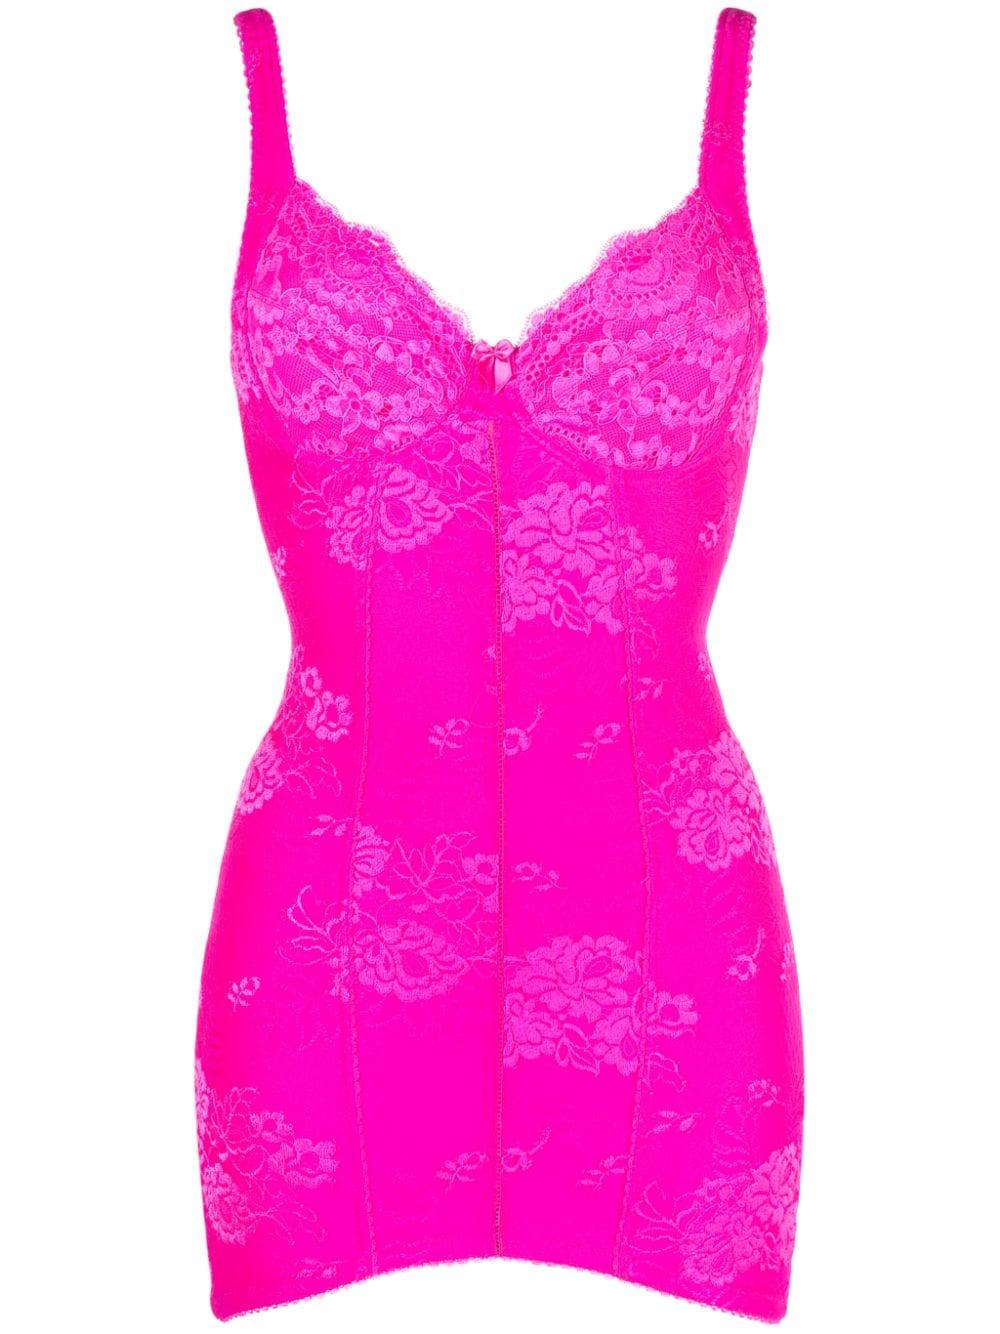 Balenciaga Floral Jacquard Lingerie Minidress in Pink | Lyst